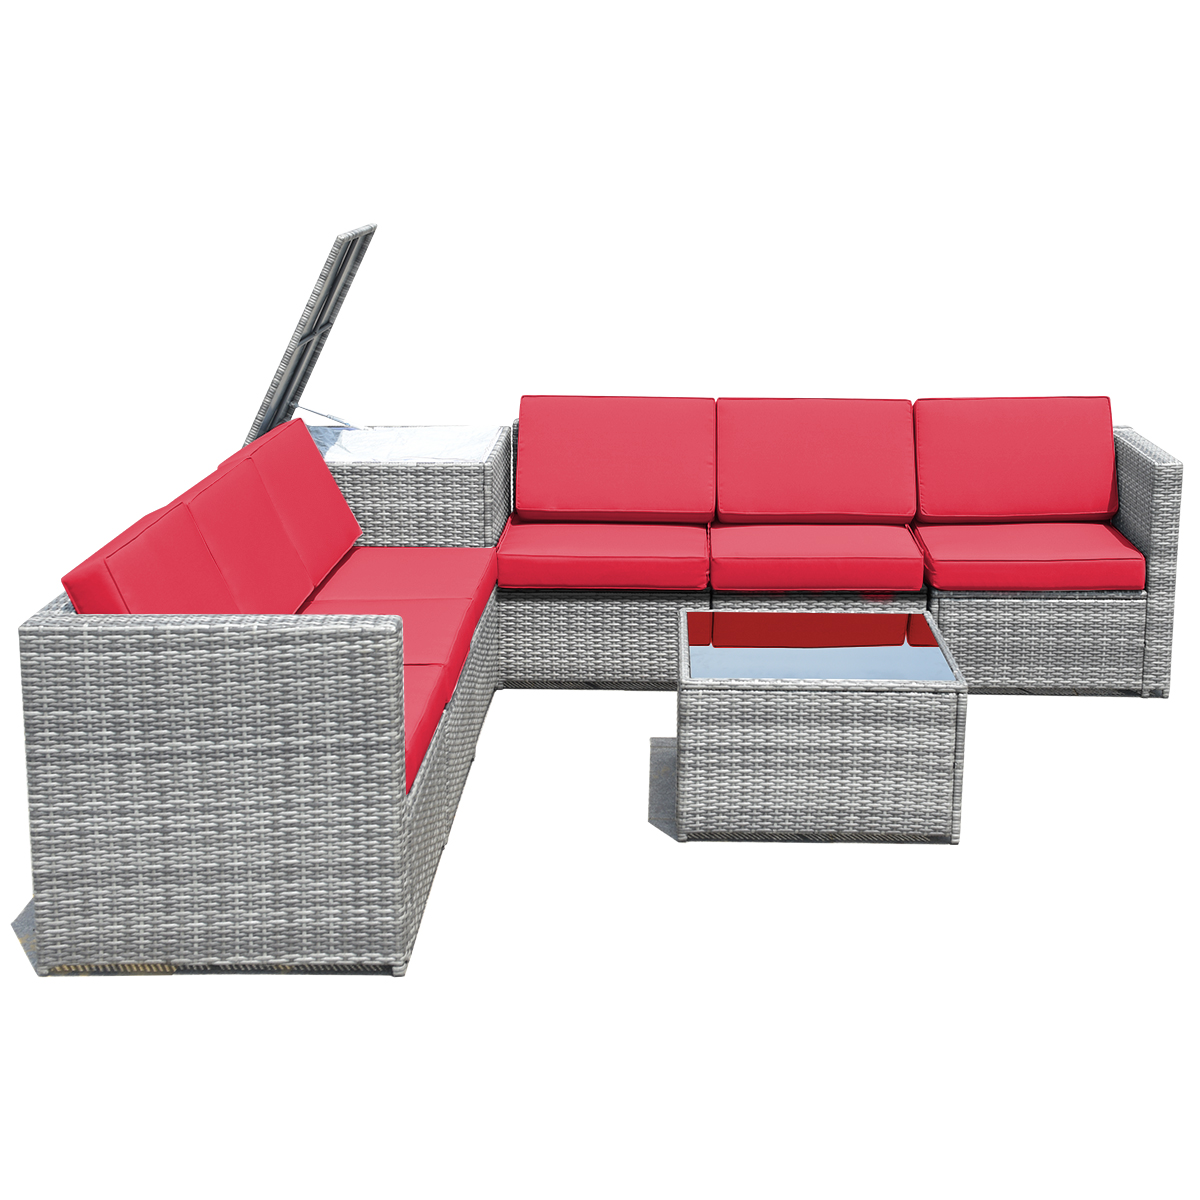 Patiojoy 8-Piece Outdoor Wicker Rattan Conversation Sofa Set w/ Storage Table Red - image 5 of 6